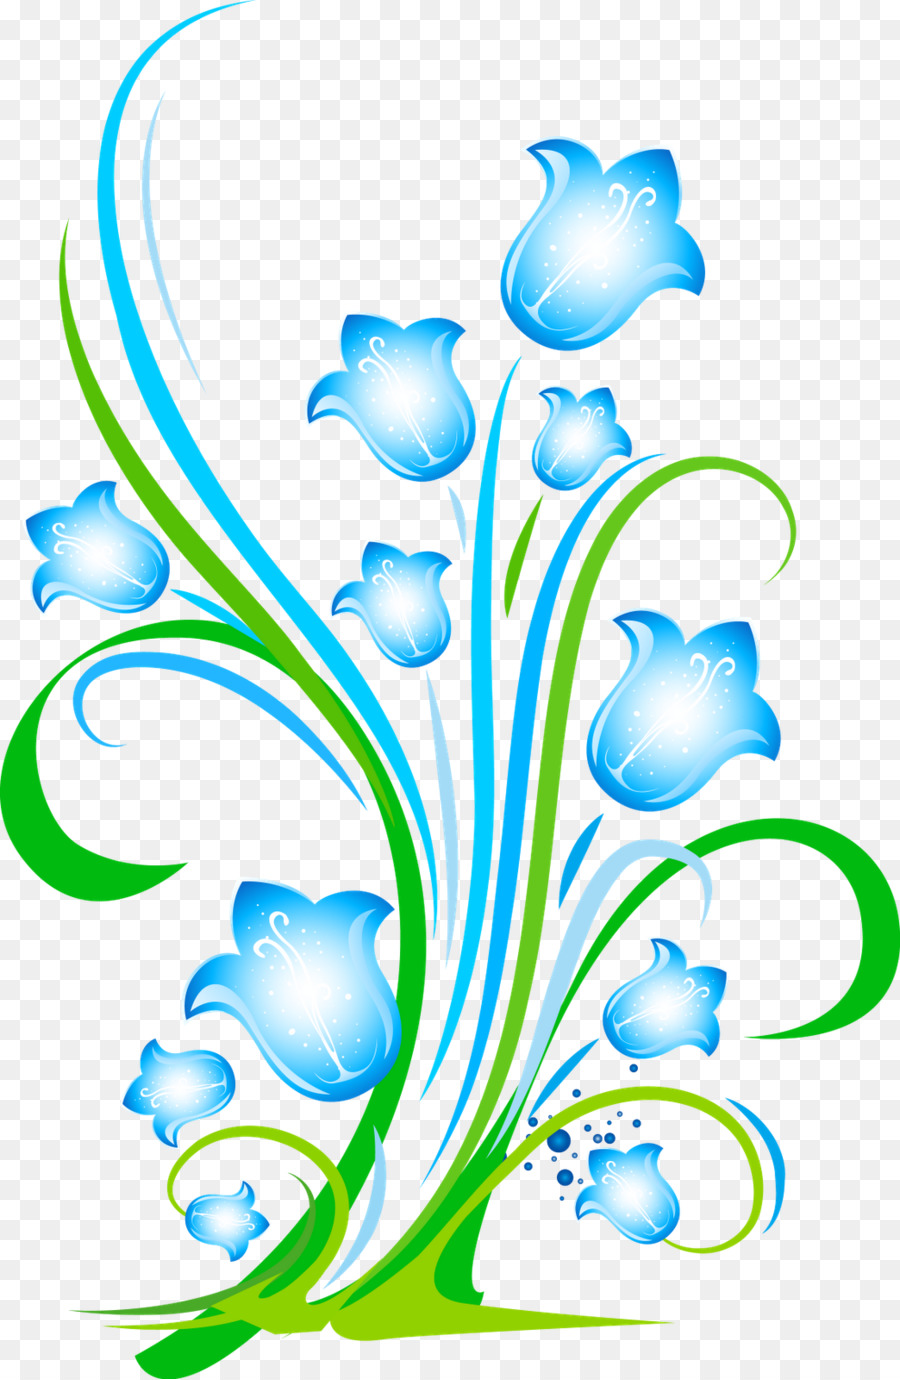 Sticker Clip art - Floral Transparent Background png download - 1044*1600 - Free Transparent Flower png Download.